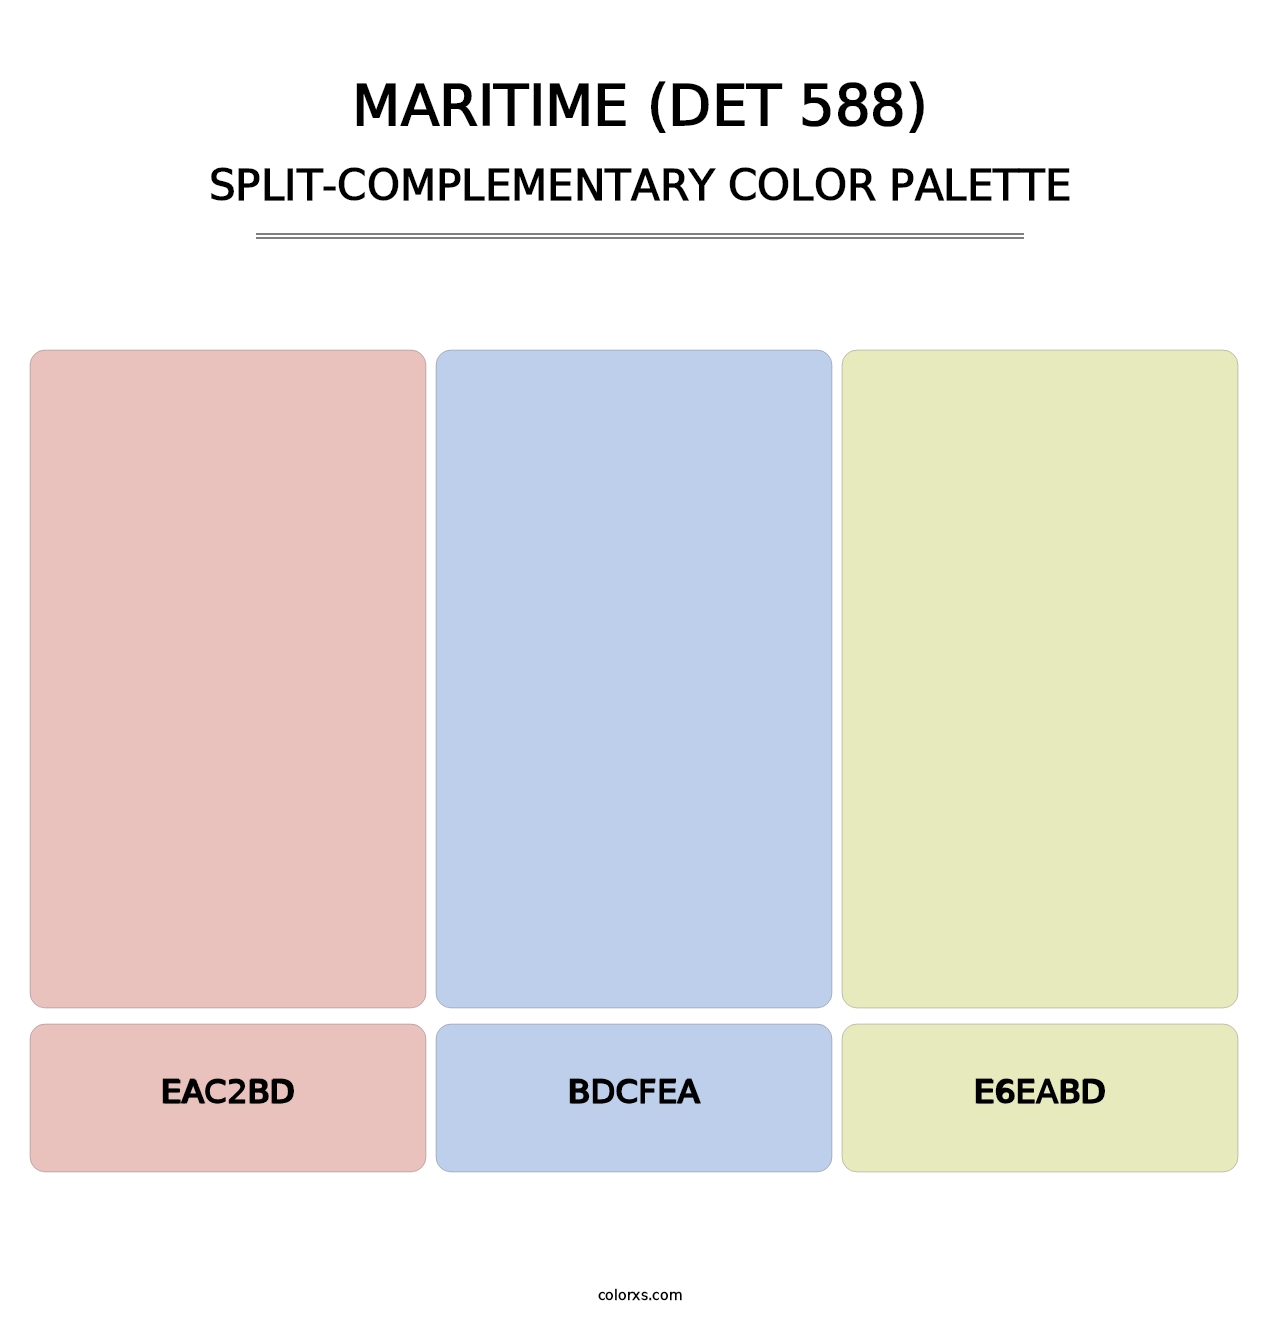 Maritime (DET 588) - Split-Complementary Color Palette